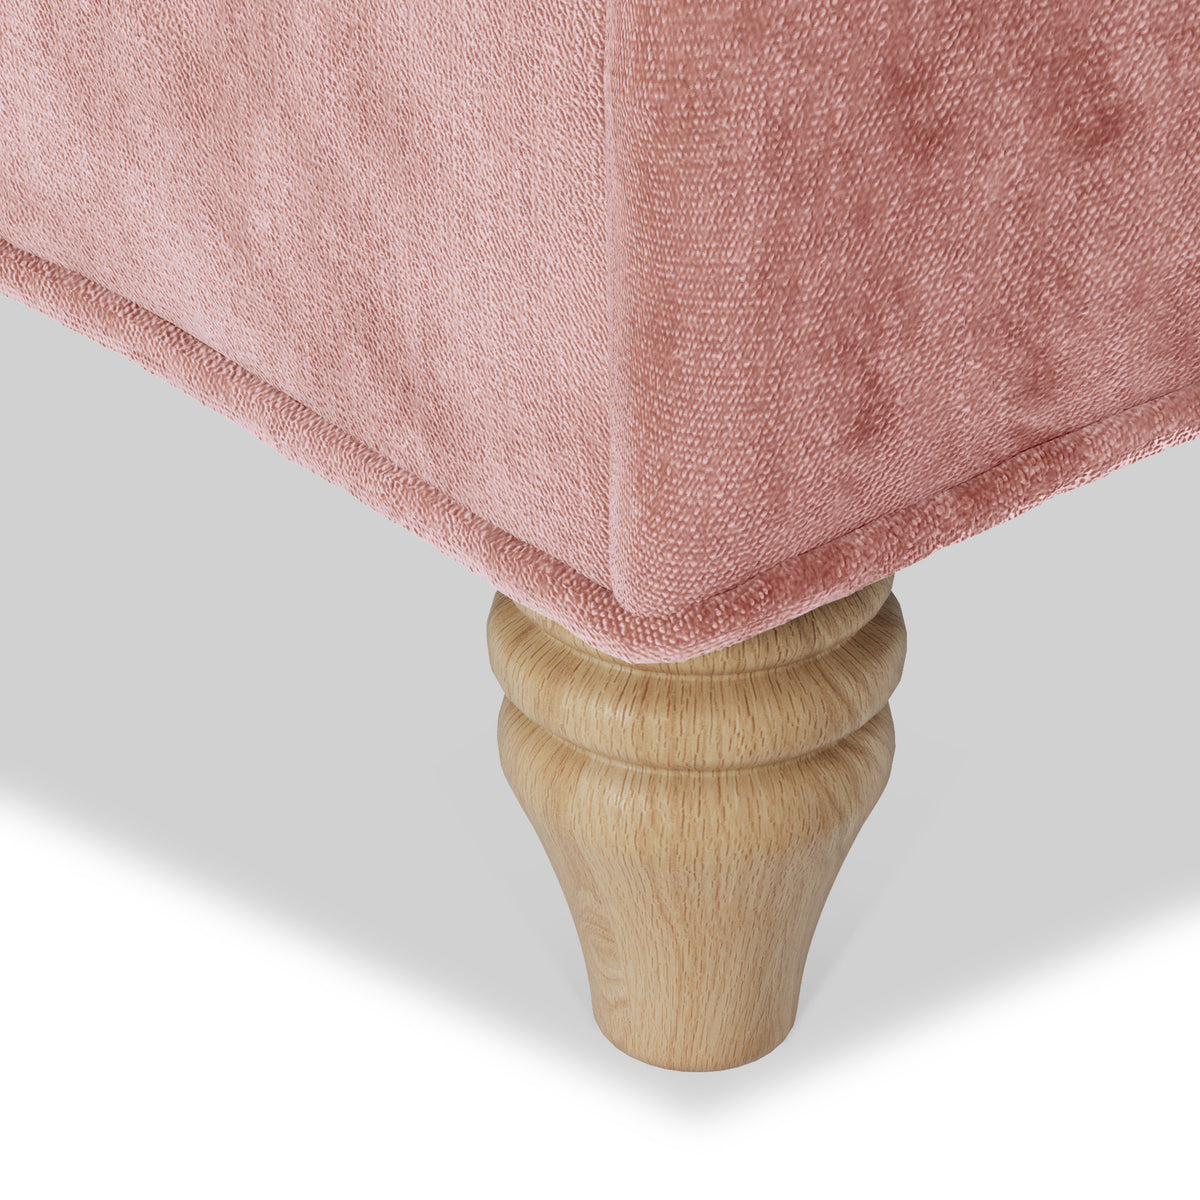 Alfie Plum Pink 2 Seater Sofa from Roseland Furniture